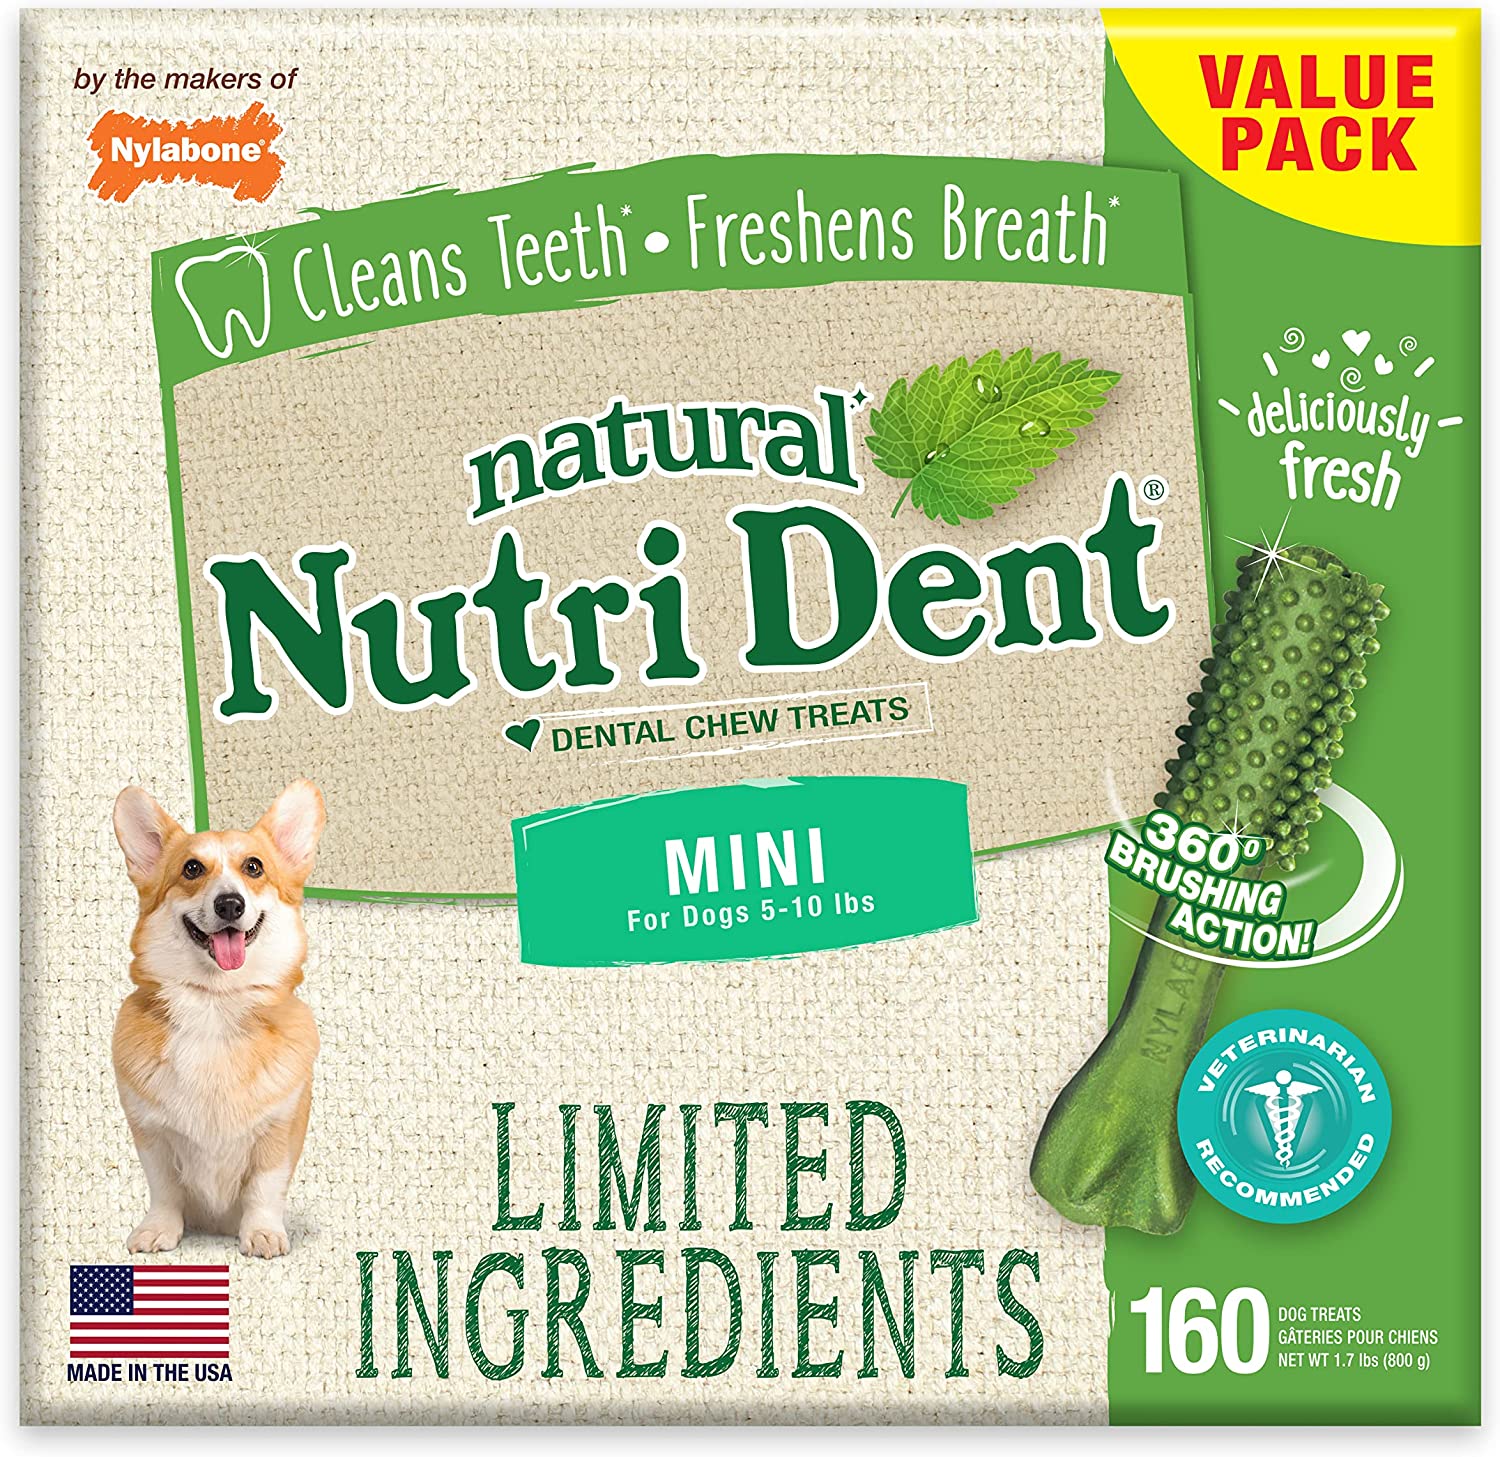 Nylabone Nutri Dent Natural Dental Chews for Dogs